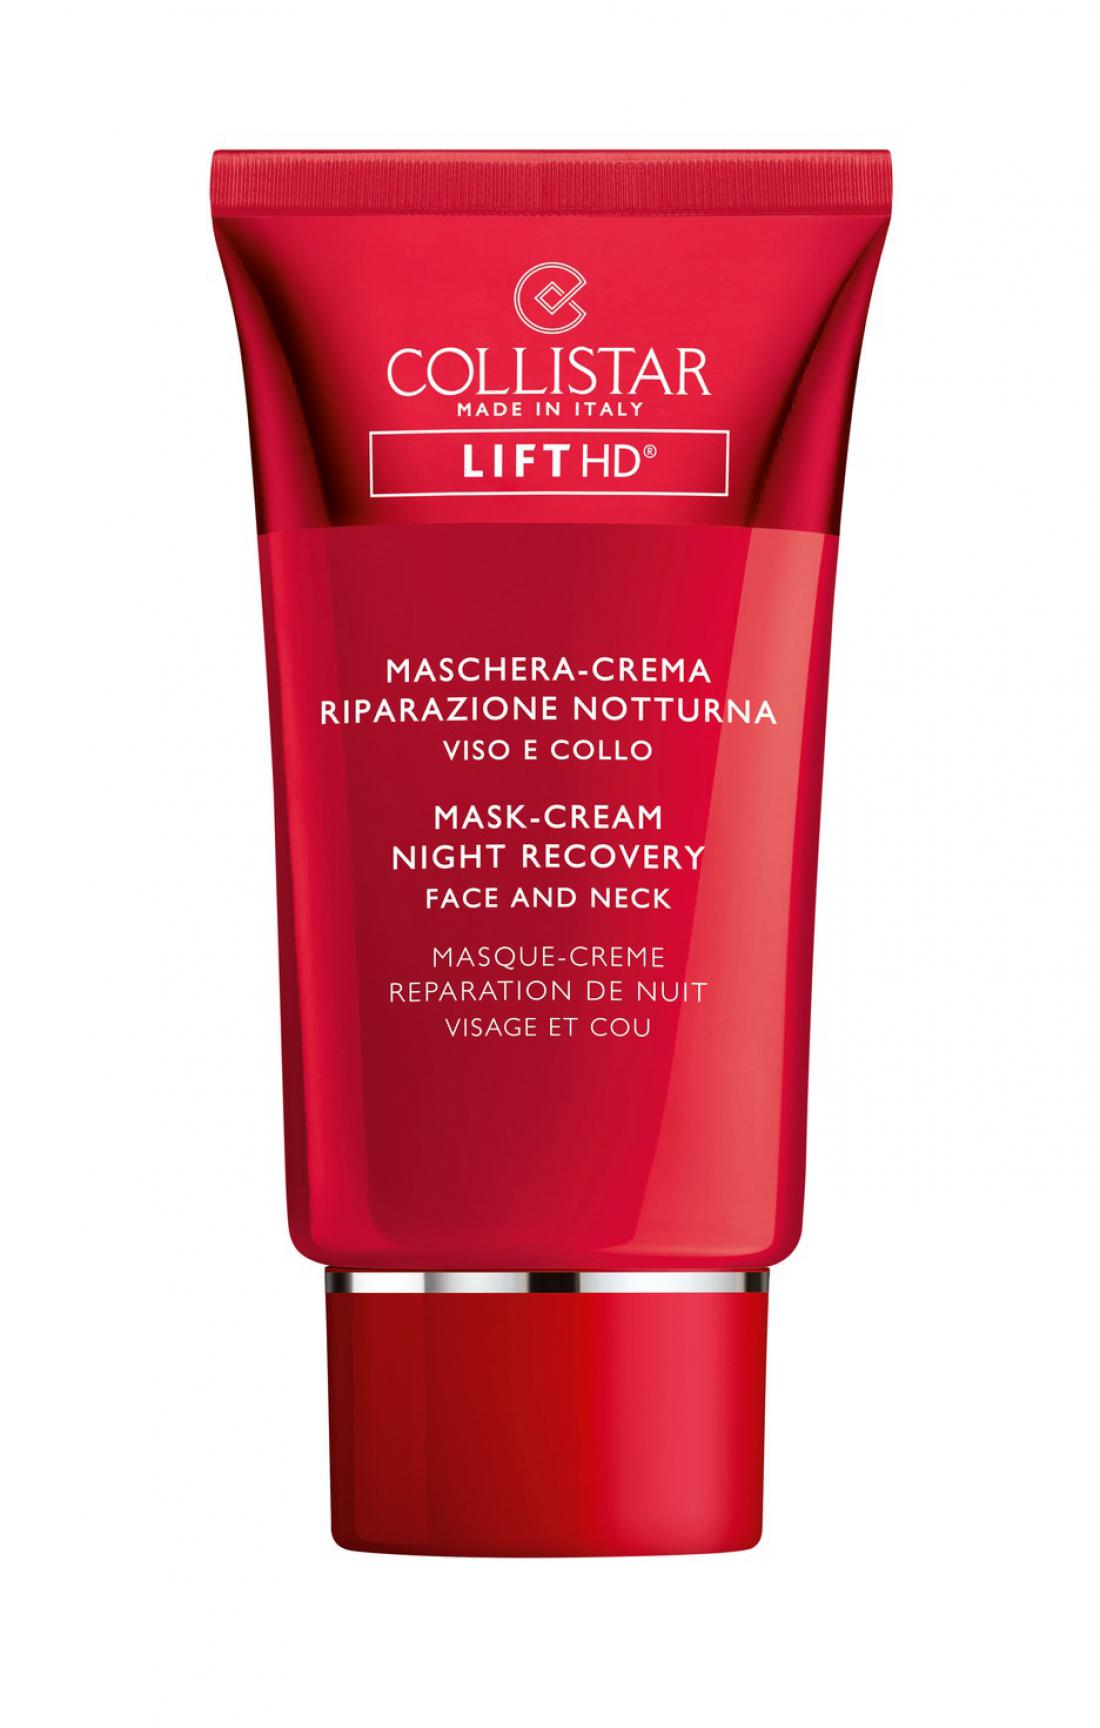 Collistar Lift HD Mask-cream Night Recovery.jpg